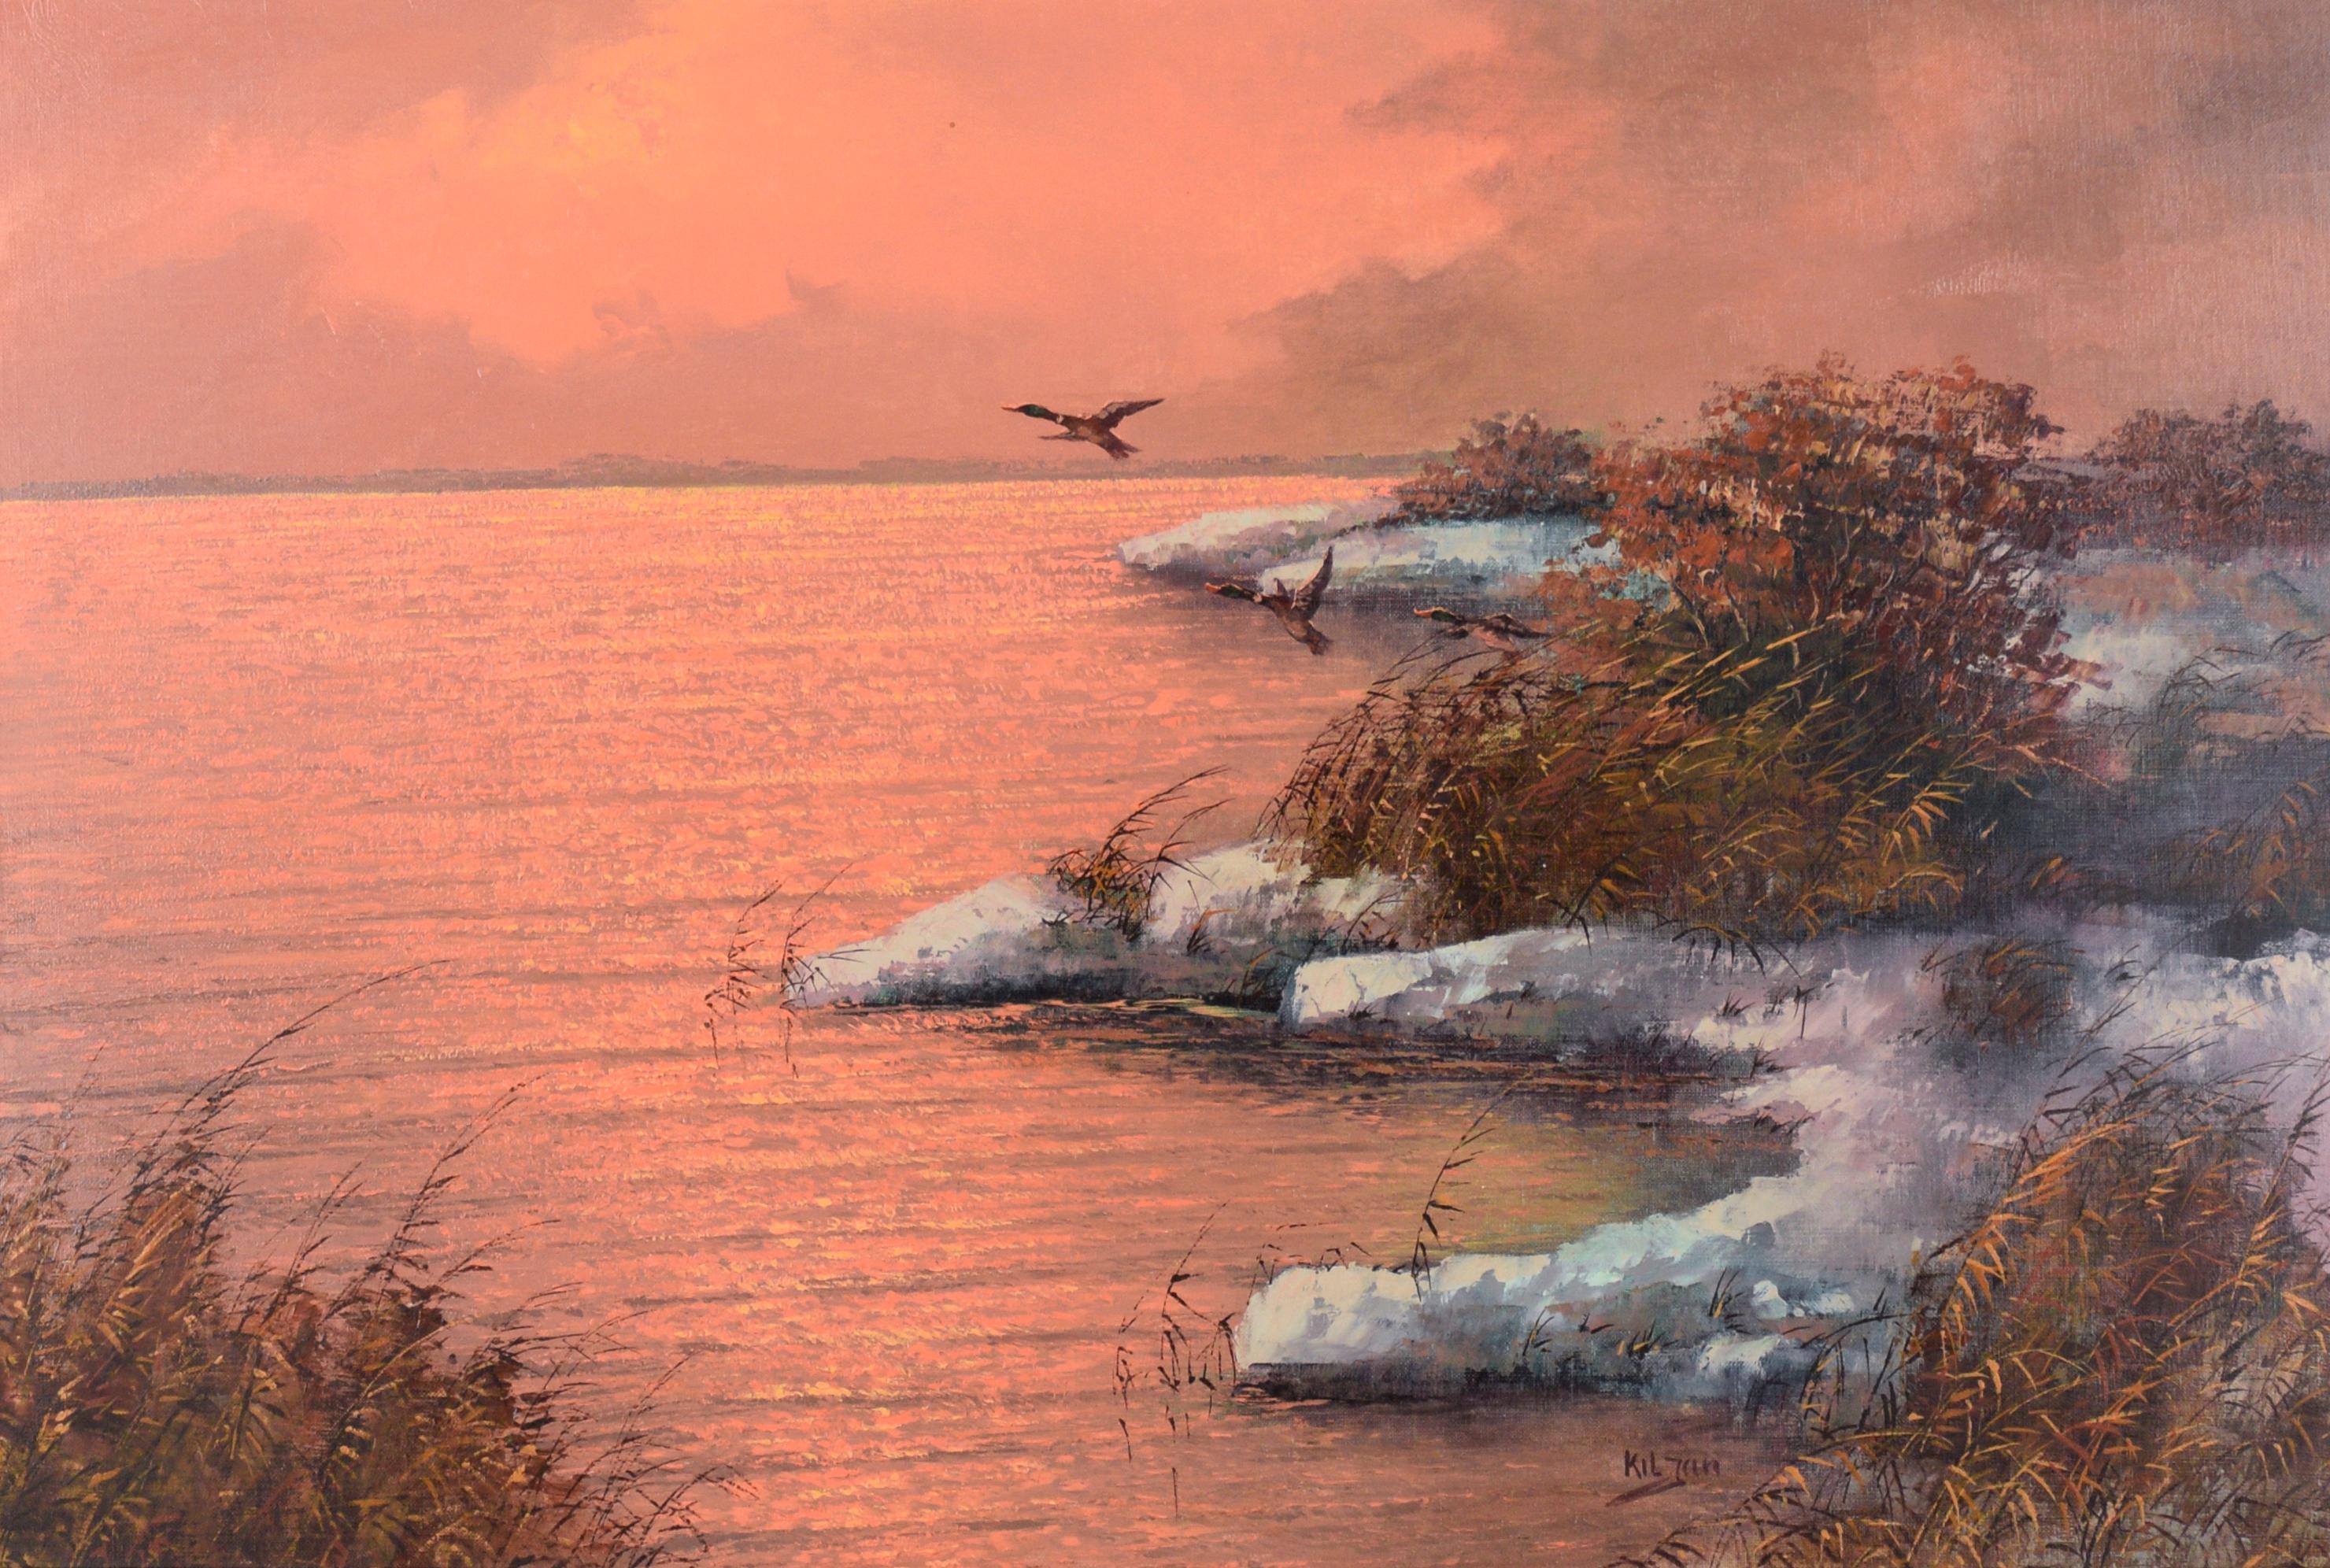 Ducks Flying Over the Lake at Sunset - Painting by Kiljan